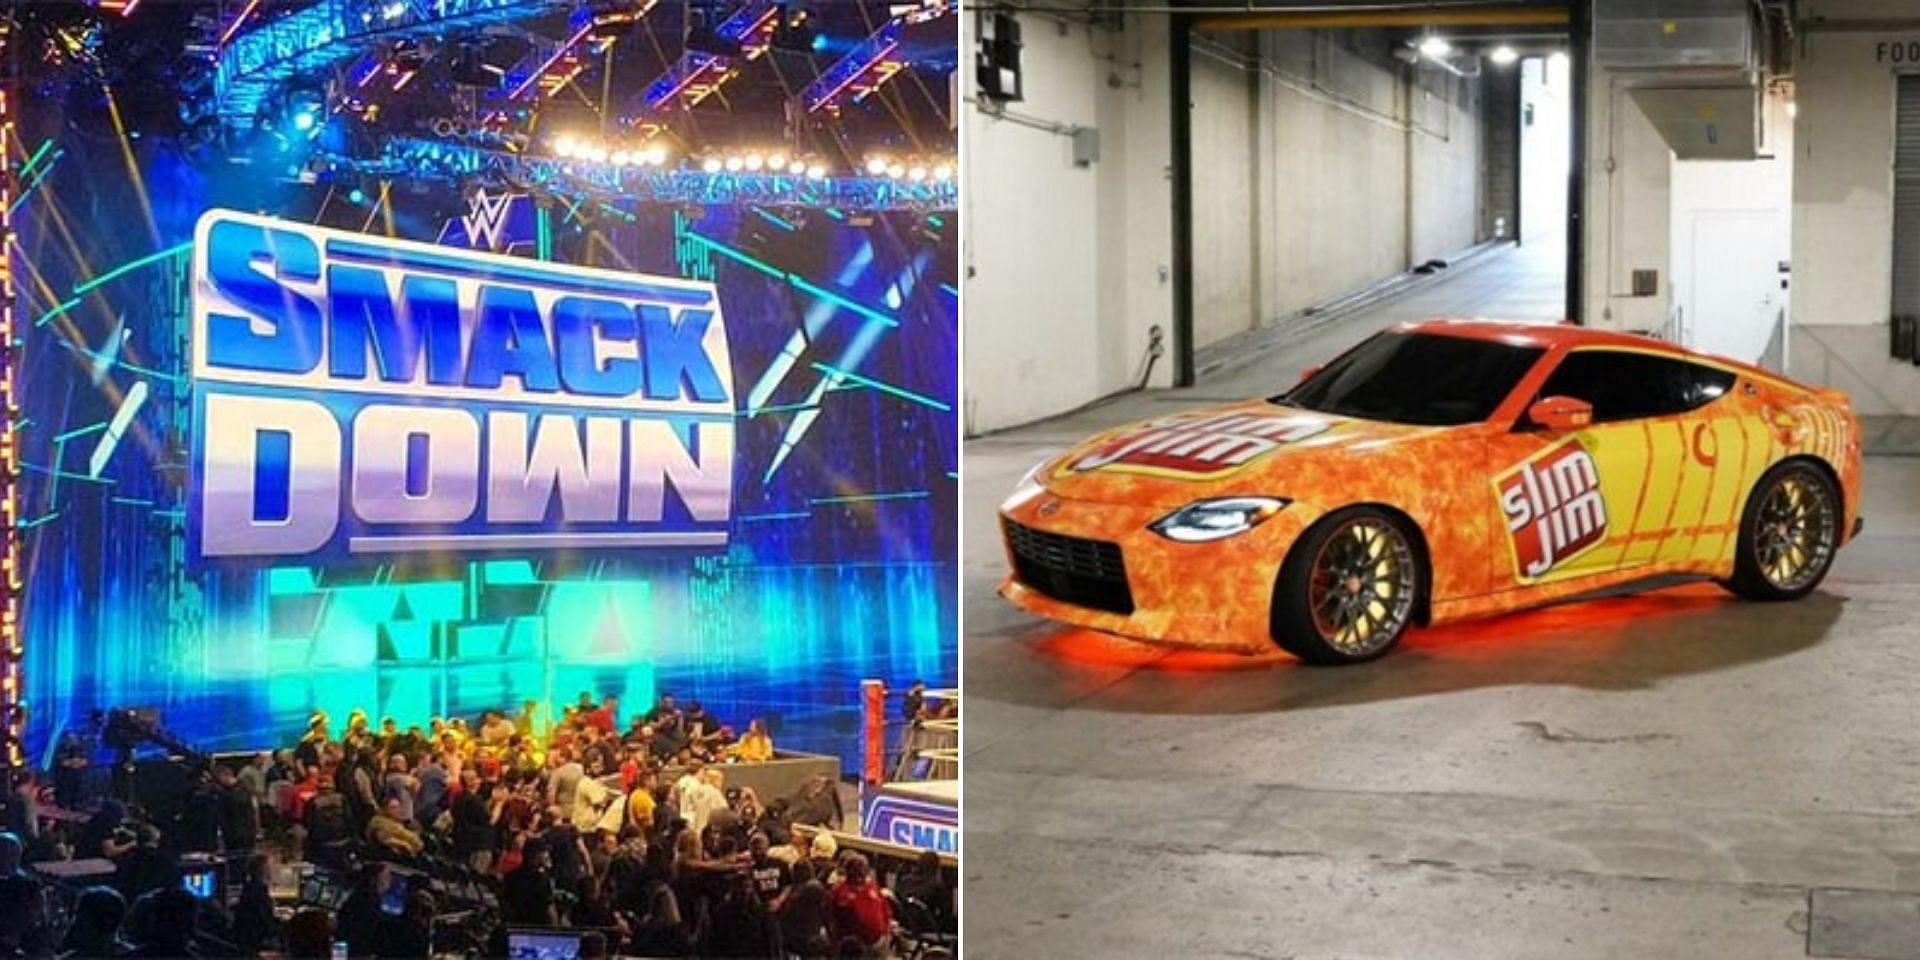 A Slim Jim car was stolen in WWE